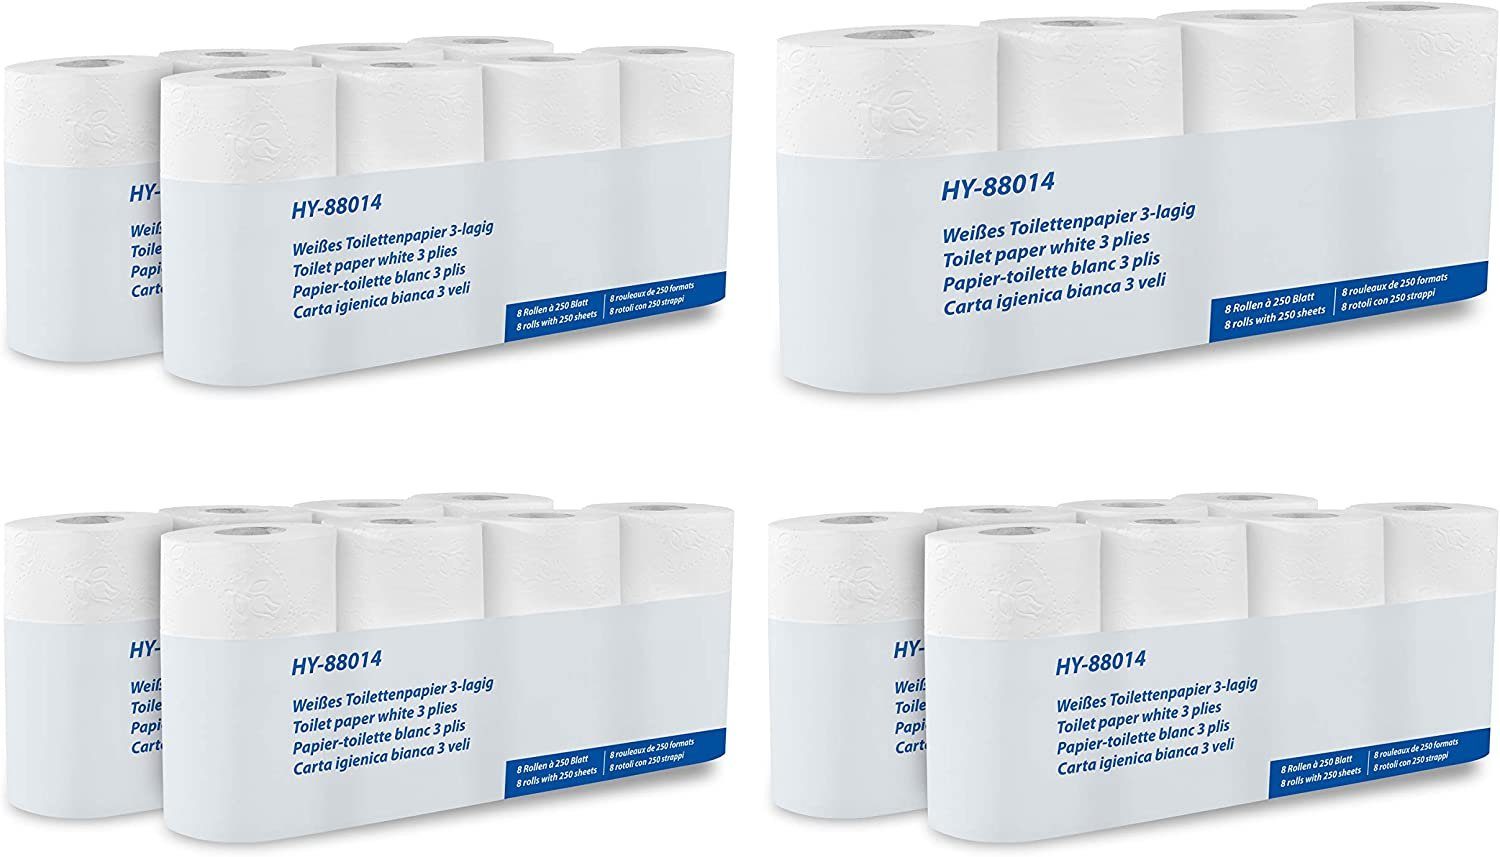 Hypafol Toilettenpapier 56 Rollen, Zellstoff, 3-lagig, 250 Blatt Rolle, motivgeprägt